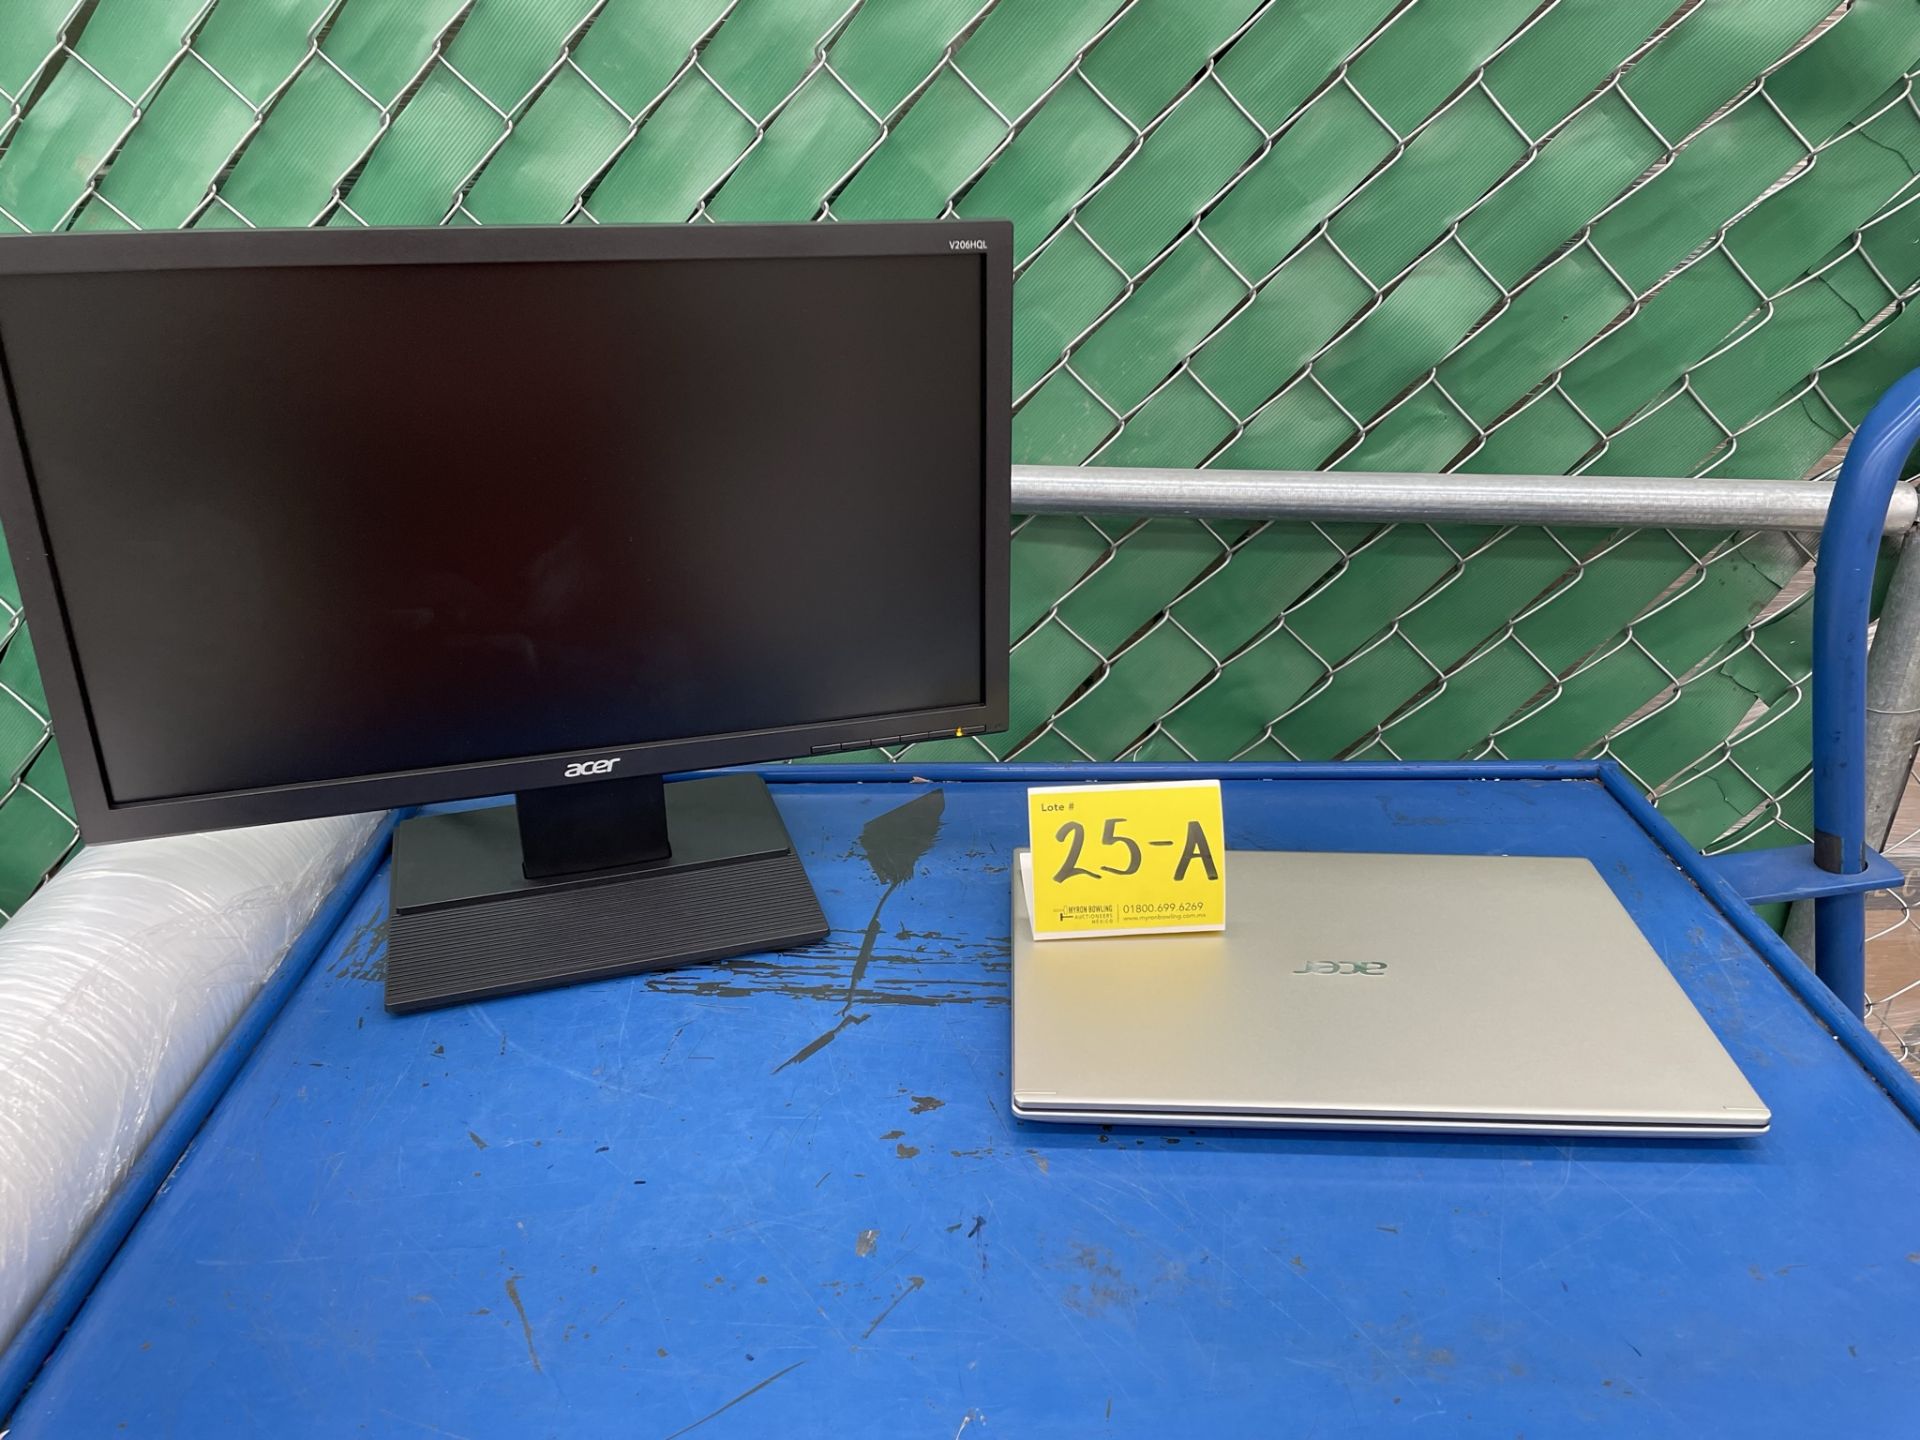 Lote de 1 Laptop + 1 Monitor contiene: 1 Laptop Marca ACER, Modelo ASPIRE 514, Serie NXA25AA0021371 - Image 6 of 7